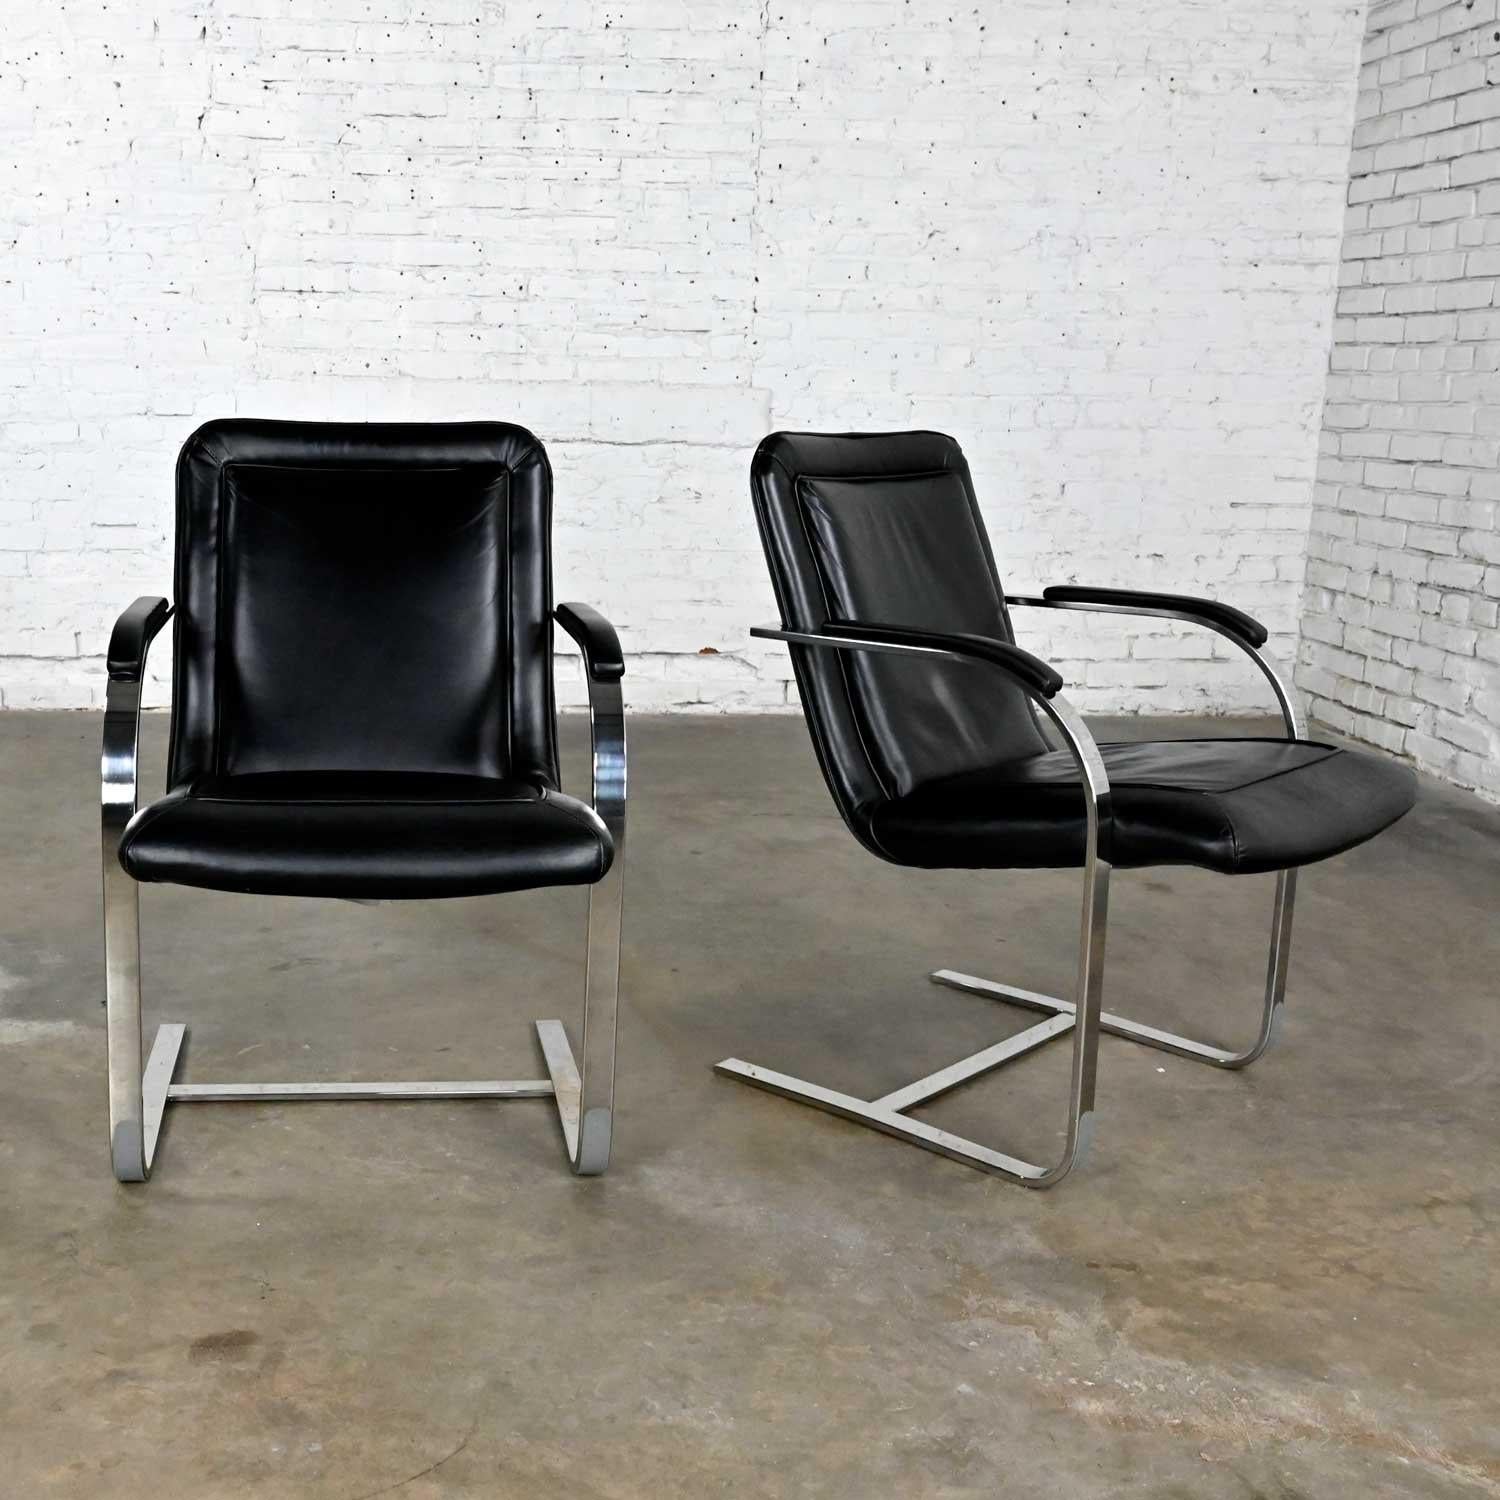 futuristic chairs